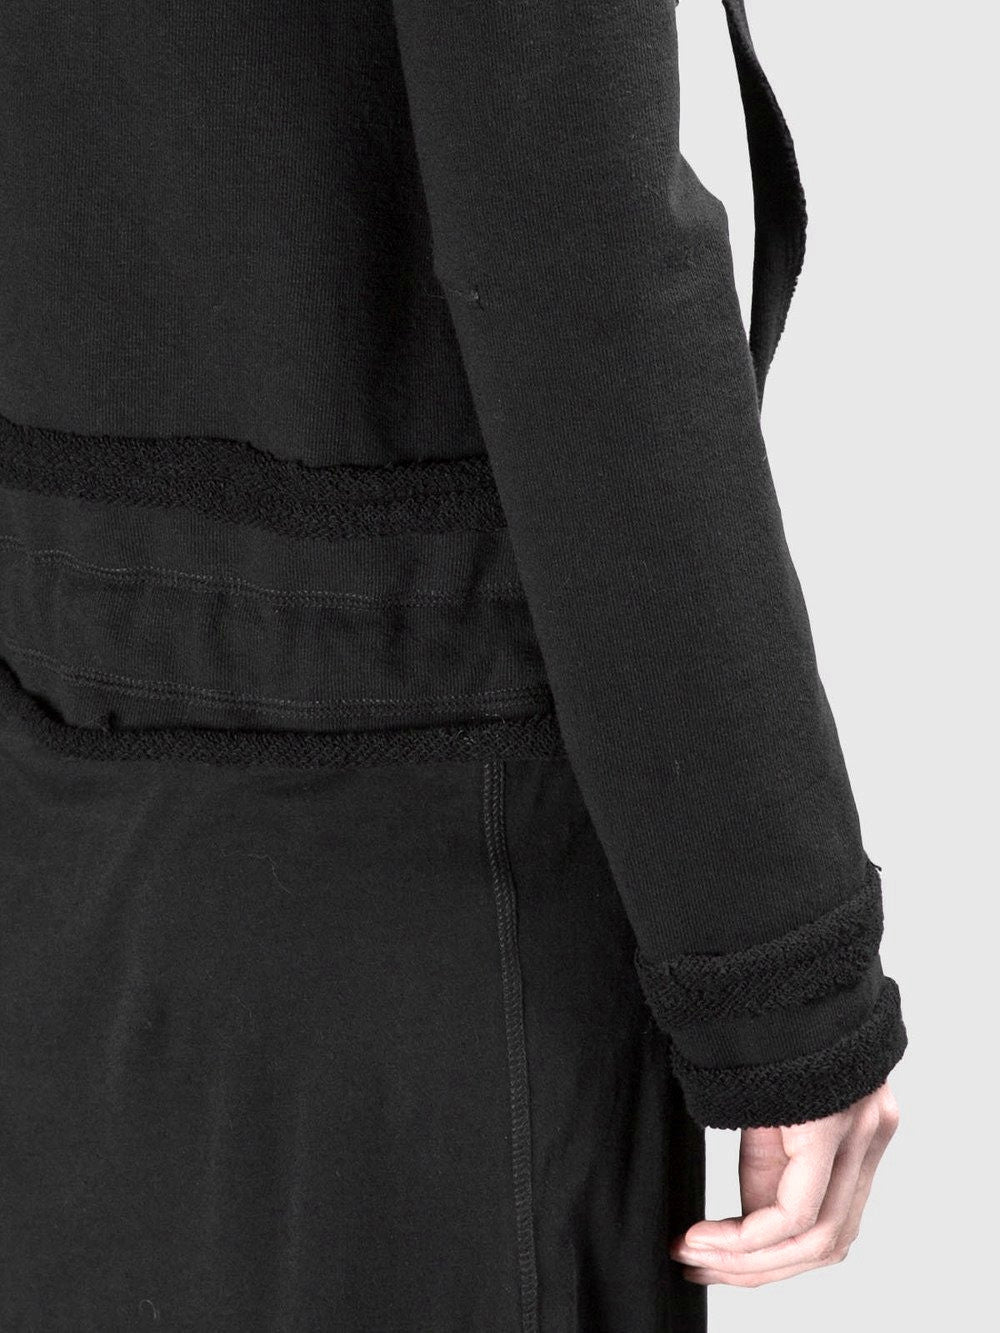 Asymmetric Raw Cut Seam Detail Sweaters Hoodie / Zipped Side Pockets ...